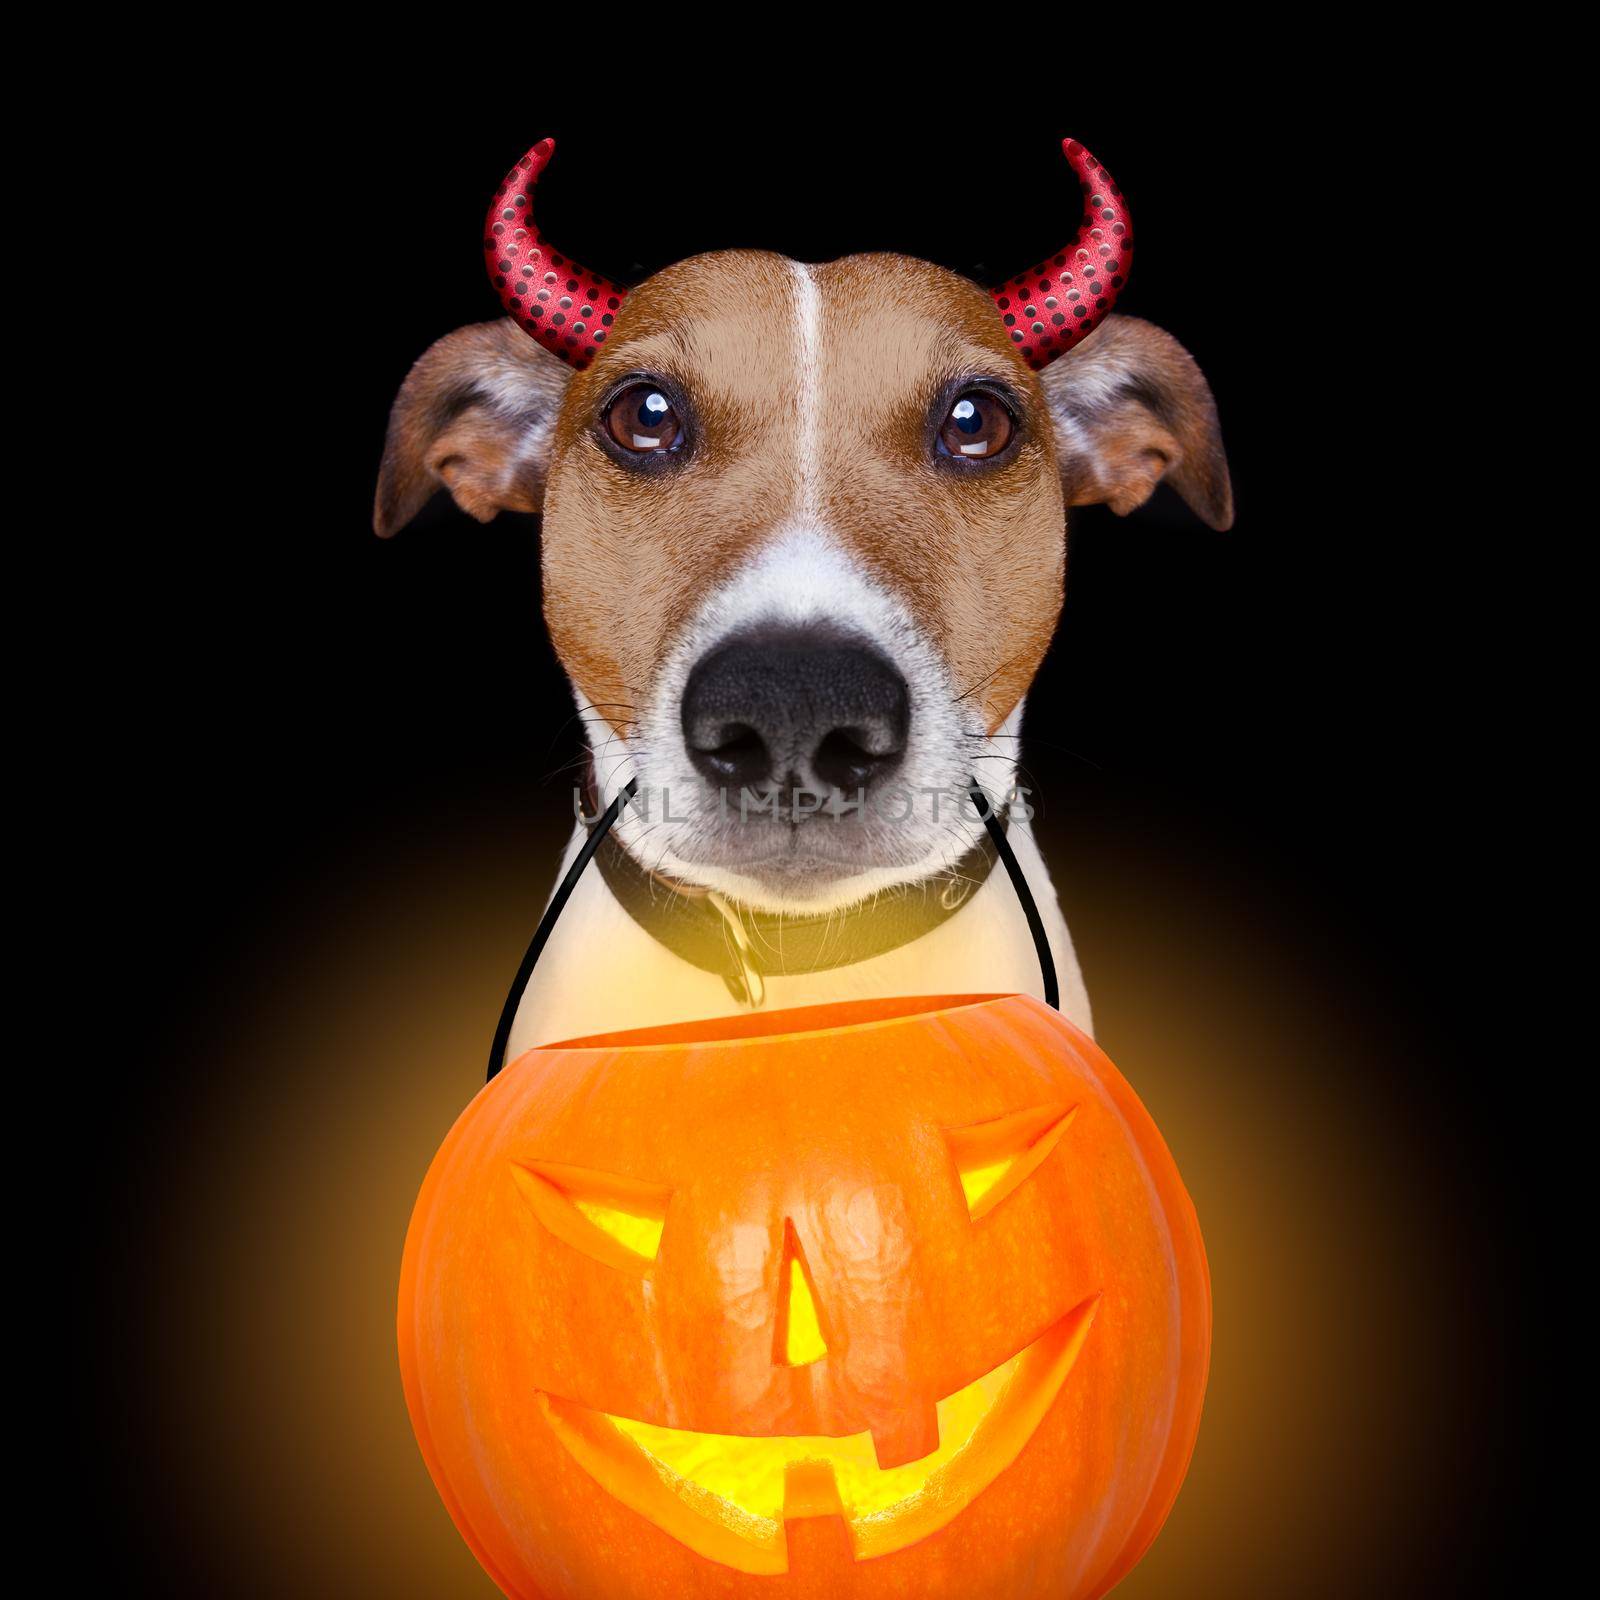 halloween pumpkin devil dog isolated on black by Brosch